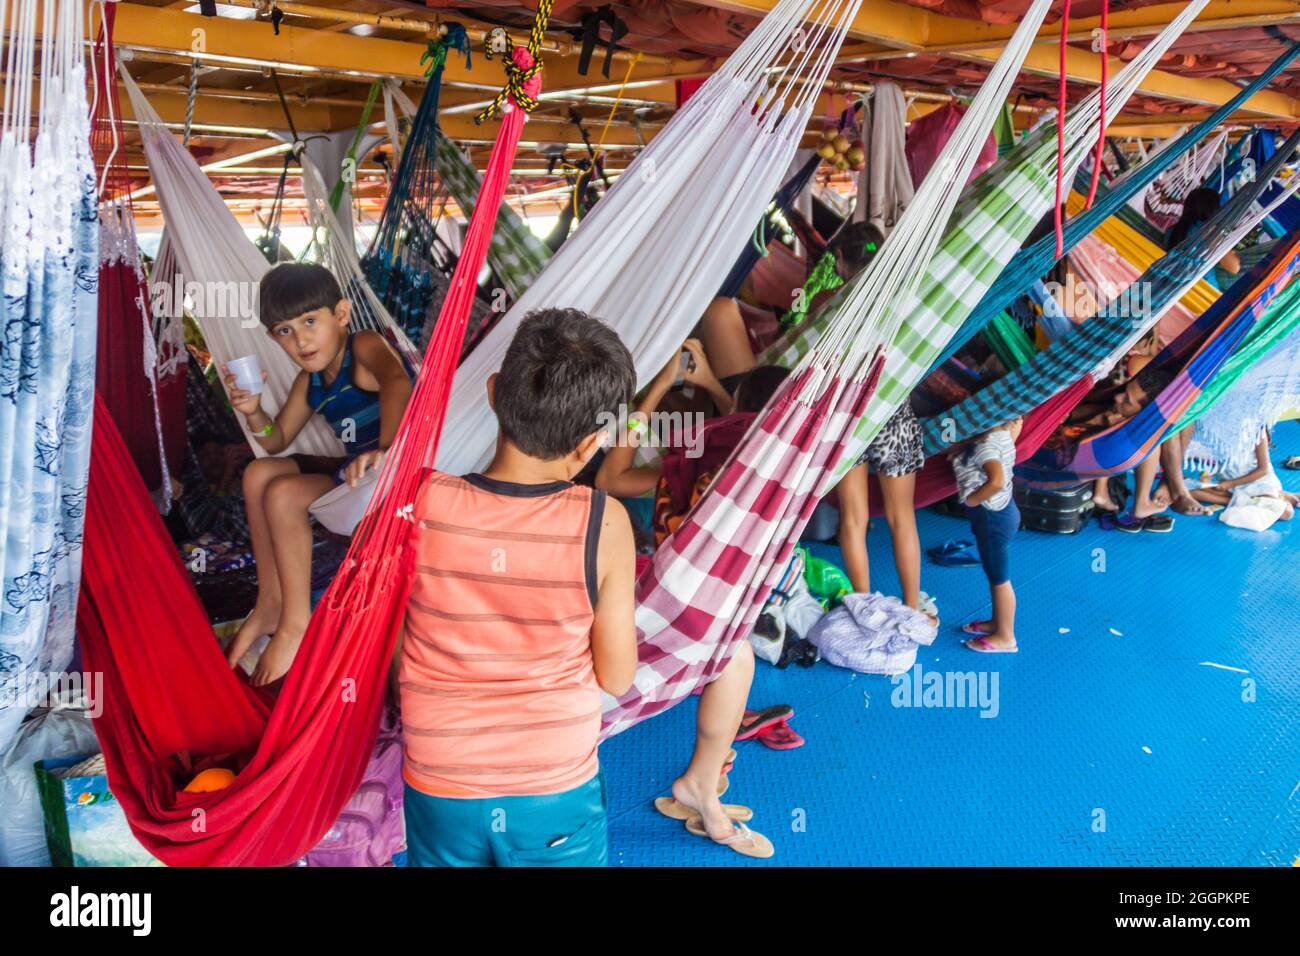 AMAZON, BRAZIL - JUNE 27, 2015: Passengers of hammock deck at the boat Anna Karoline II which plies river Amazon between Santarem and Manaus, Brazil. Stock Photo